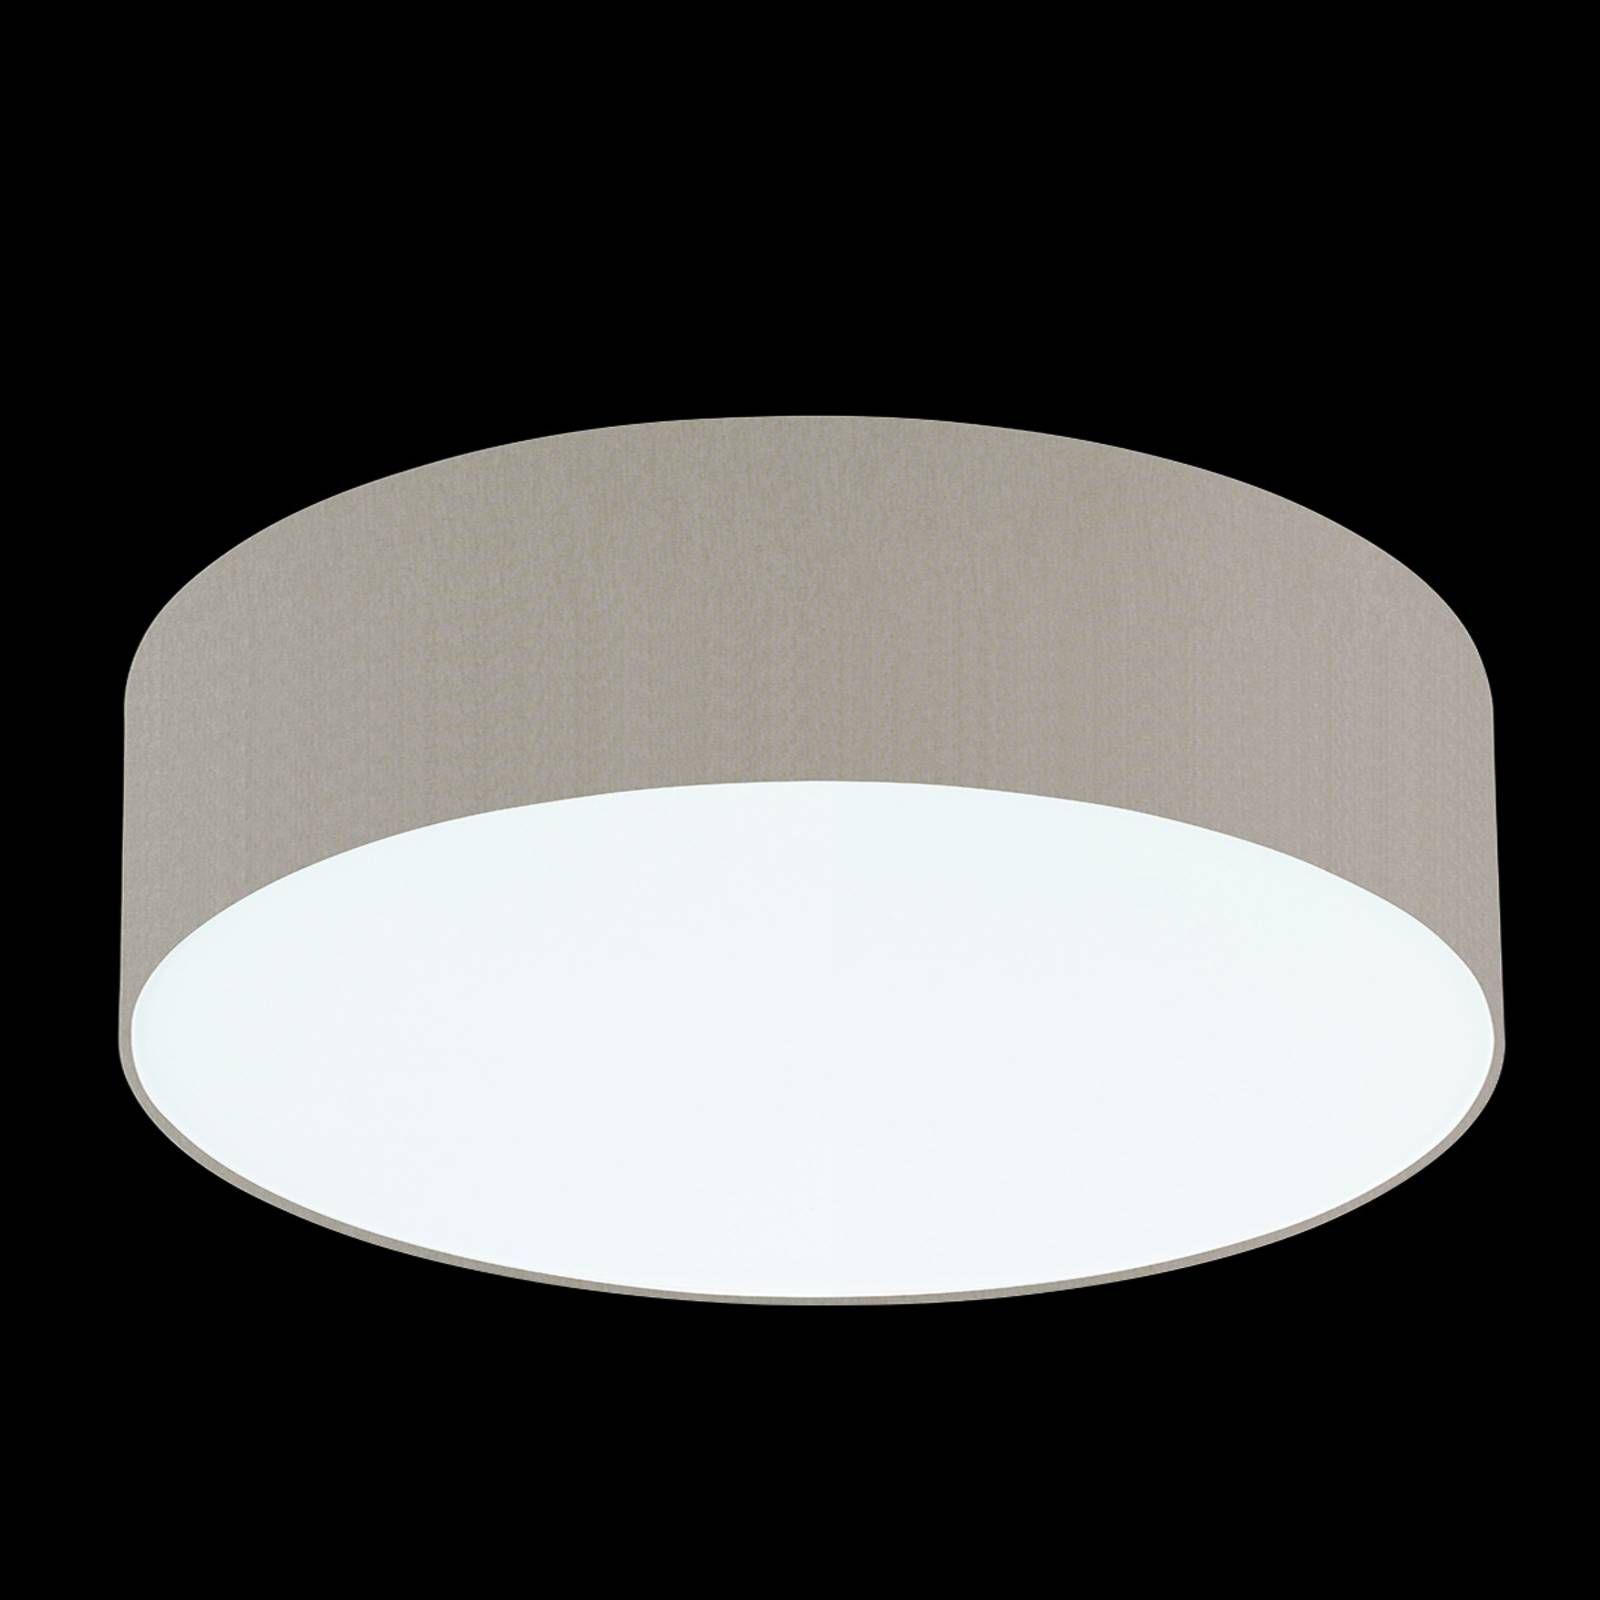 Hufnagel Melanžovo-hnedé stropné svietidlo Mara, 60 cm, Obývacia izba / jedáleň, chinc, E27, 57W, K: 17cm